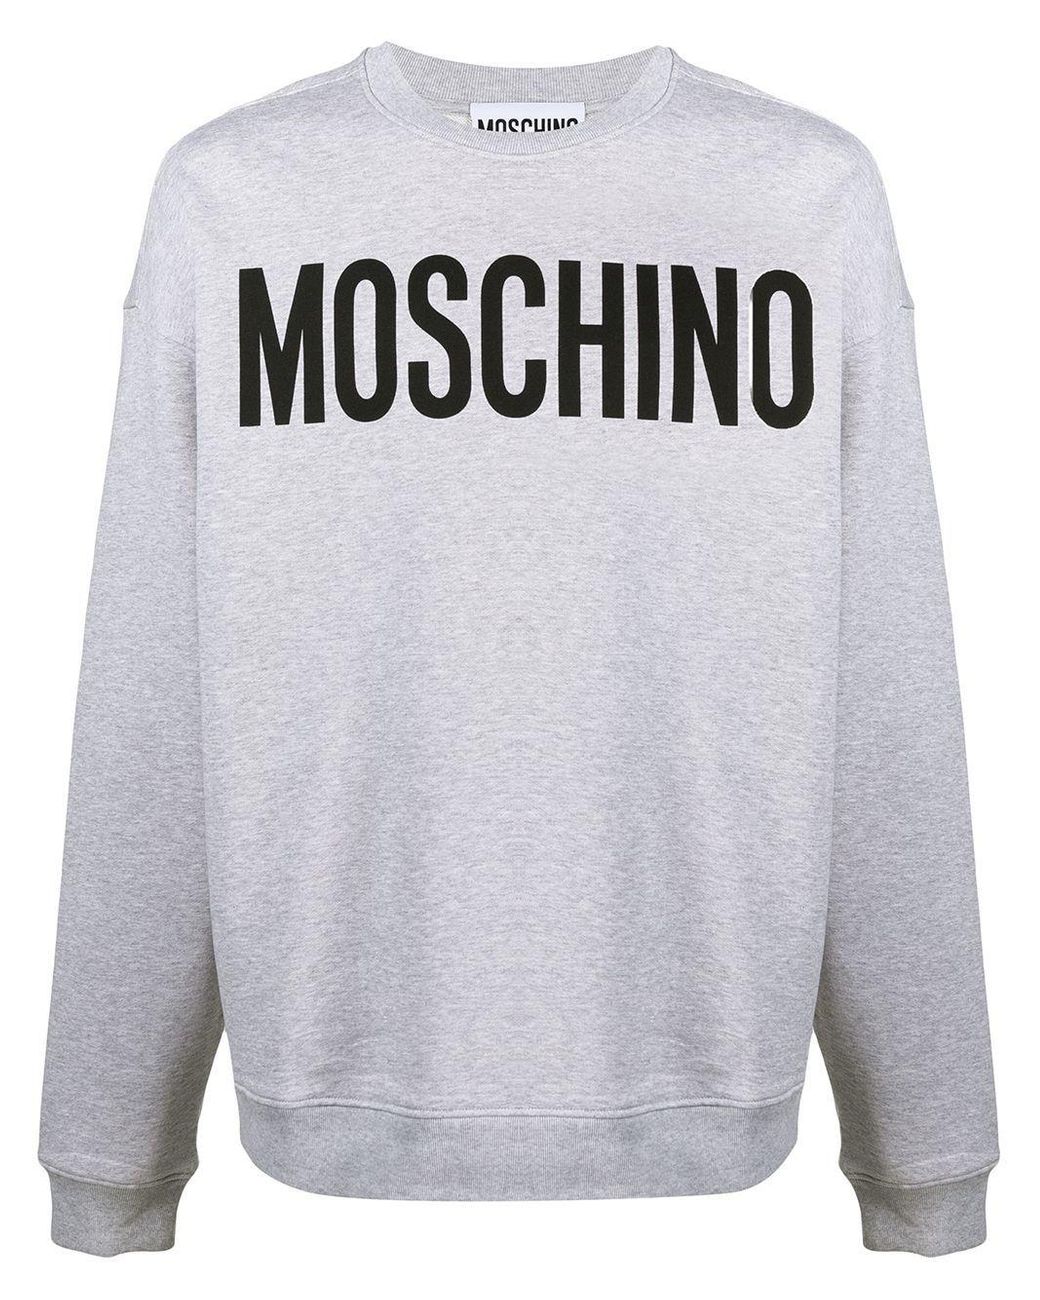 Moschino Cotton Sweatshirt in Grey (Gray) for Men - Lyst